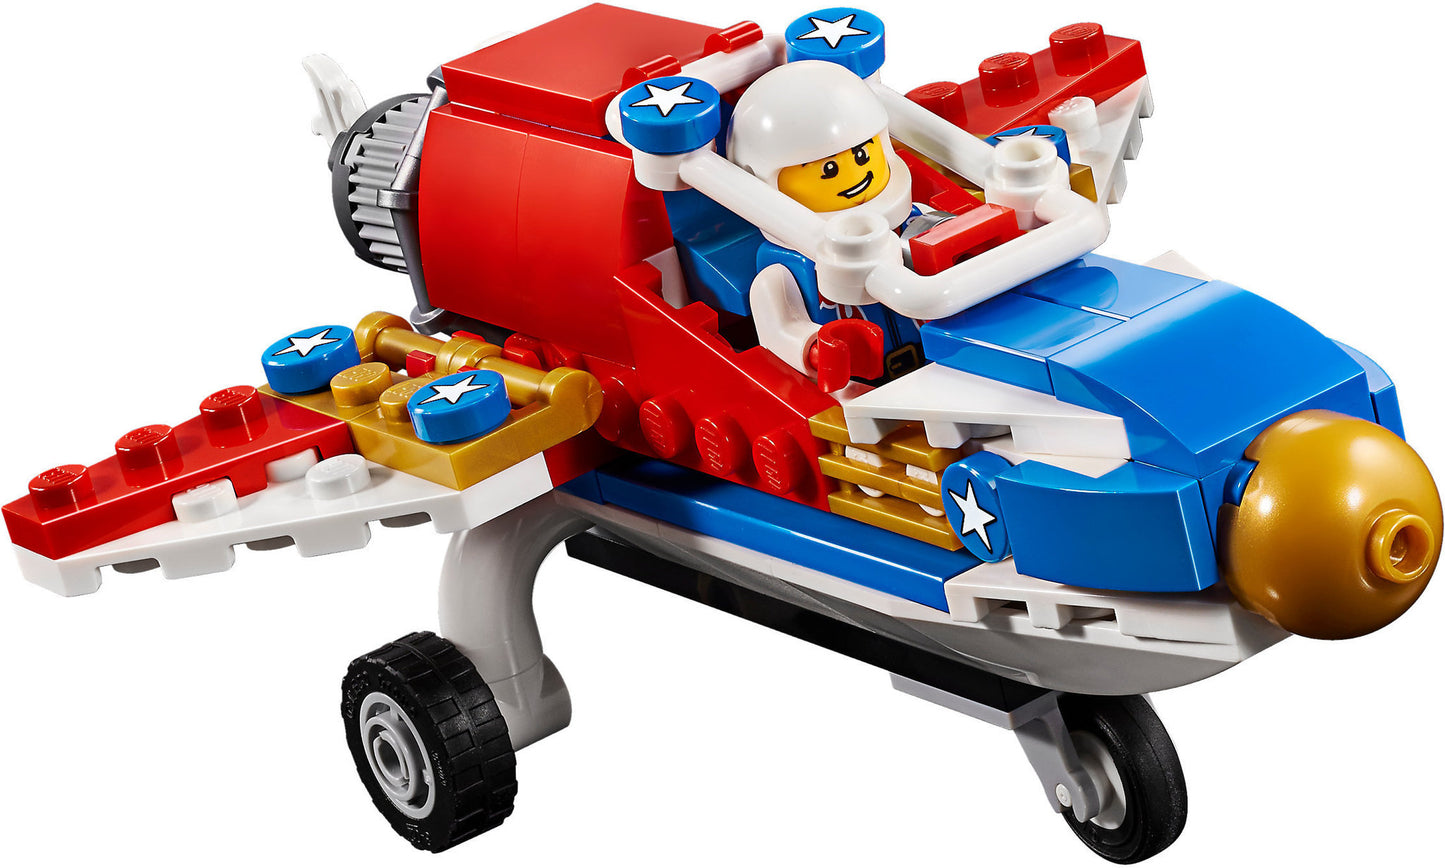 31076 LEGO Creator  - Biplano Acrobatico